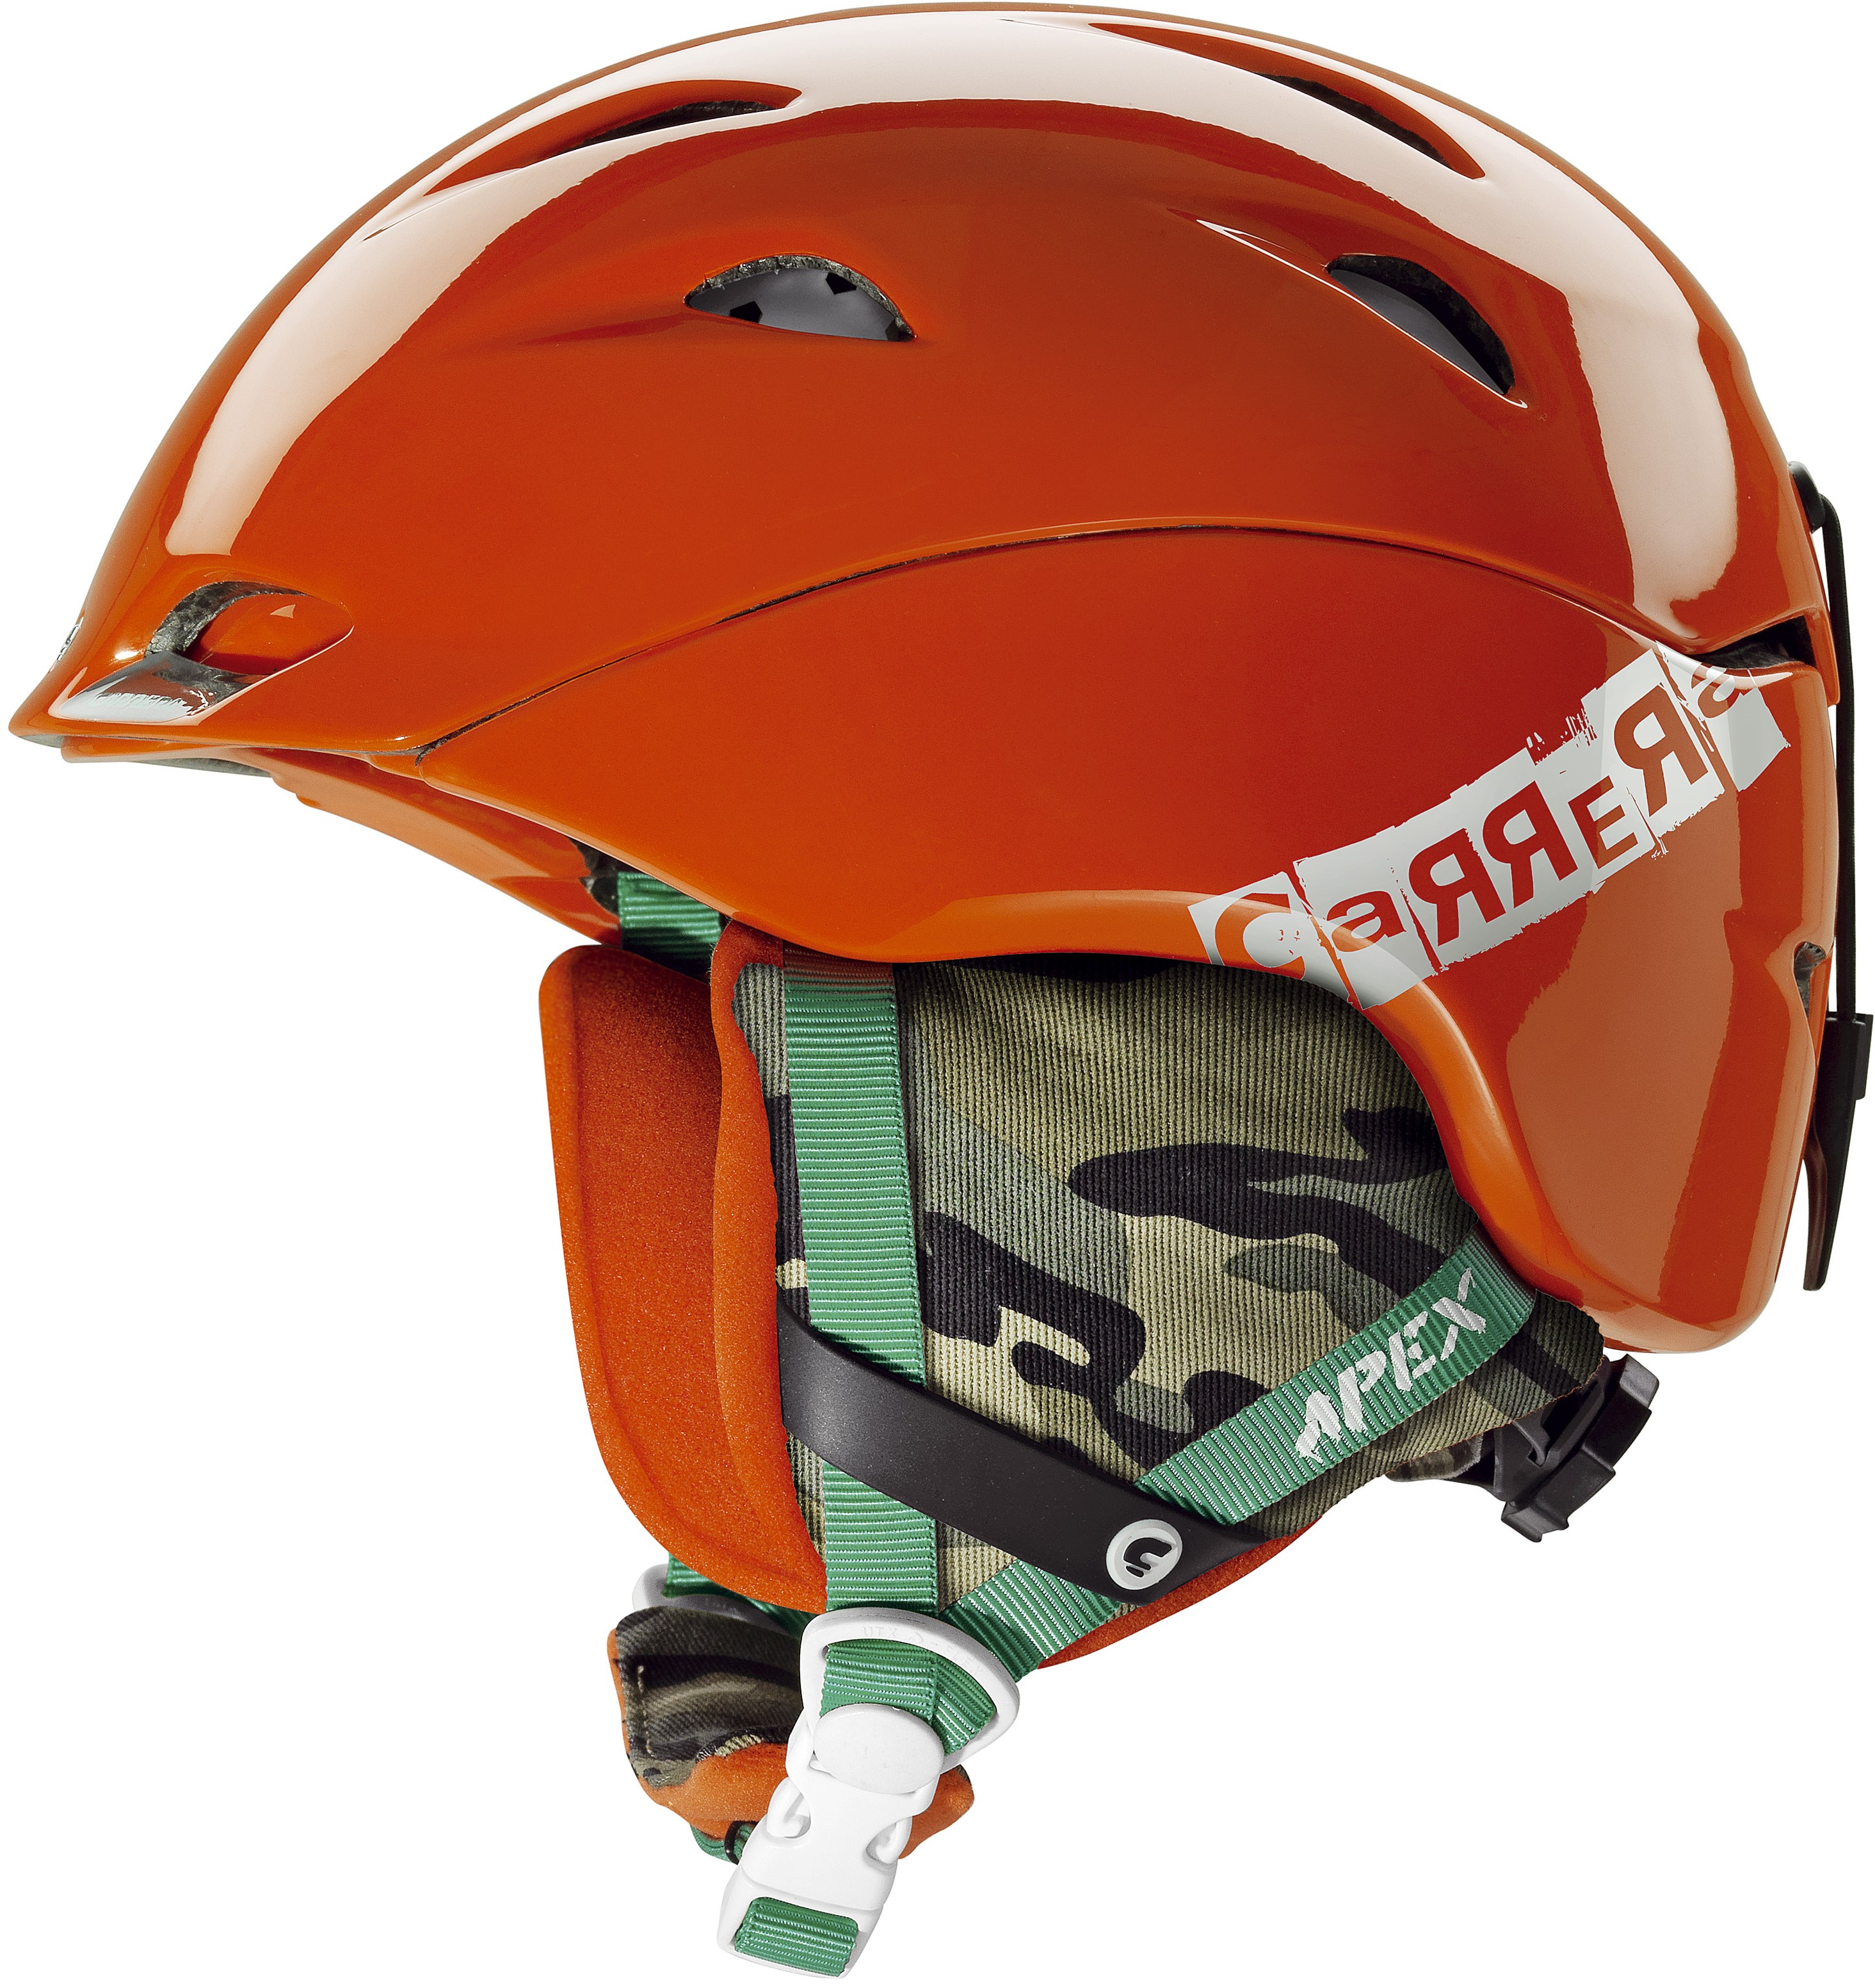 APEX T - Women's ski helmet